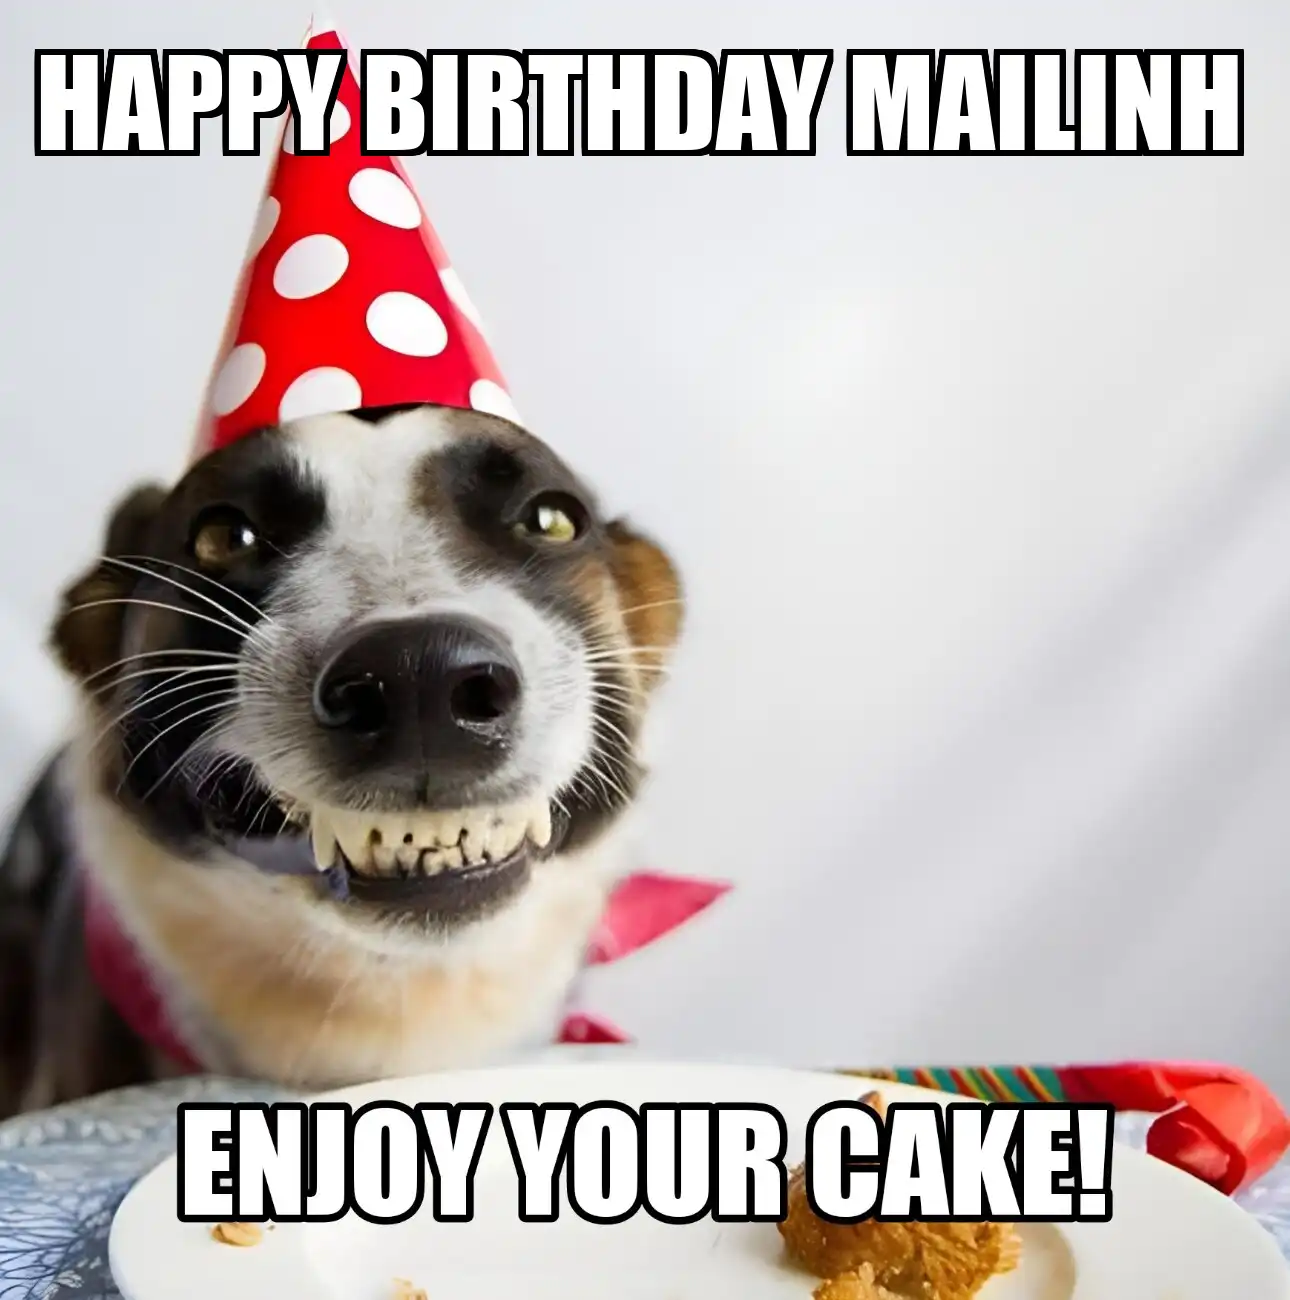 Happy Birthday Mailinh Enjoy Your Cake Dog Meme